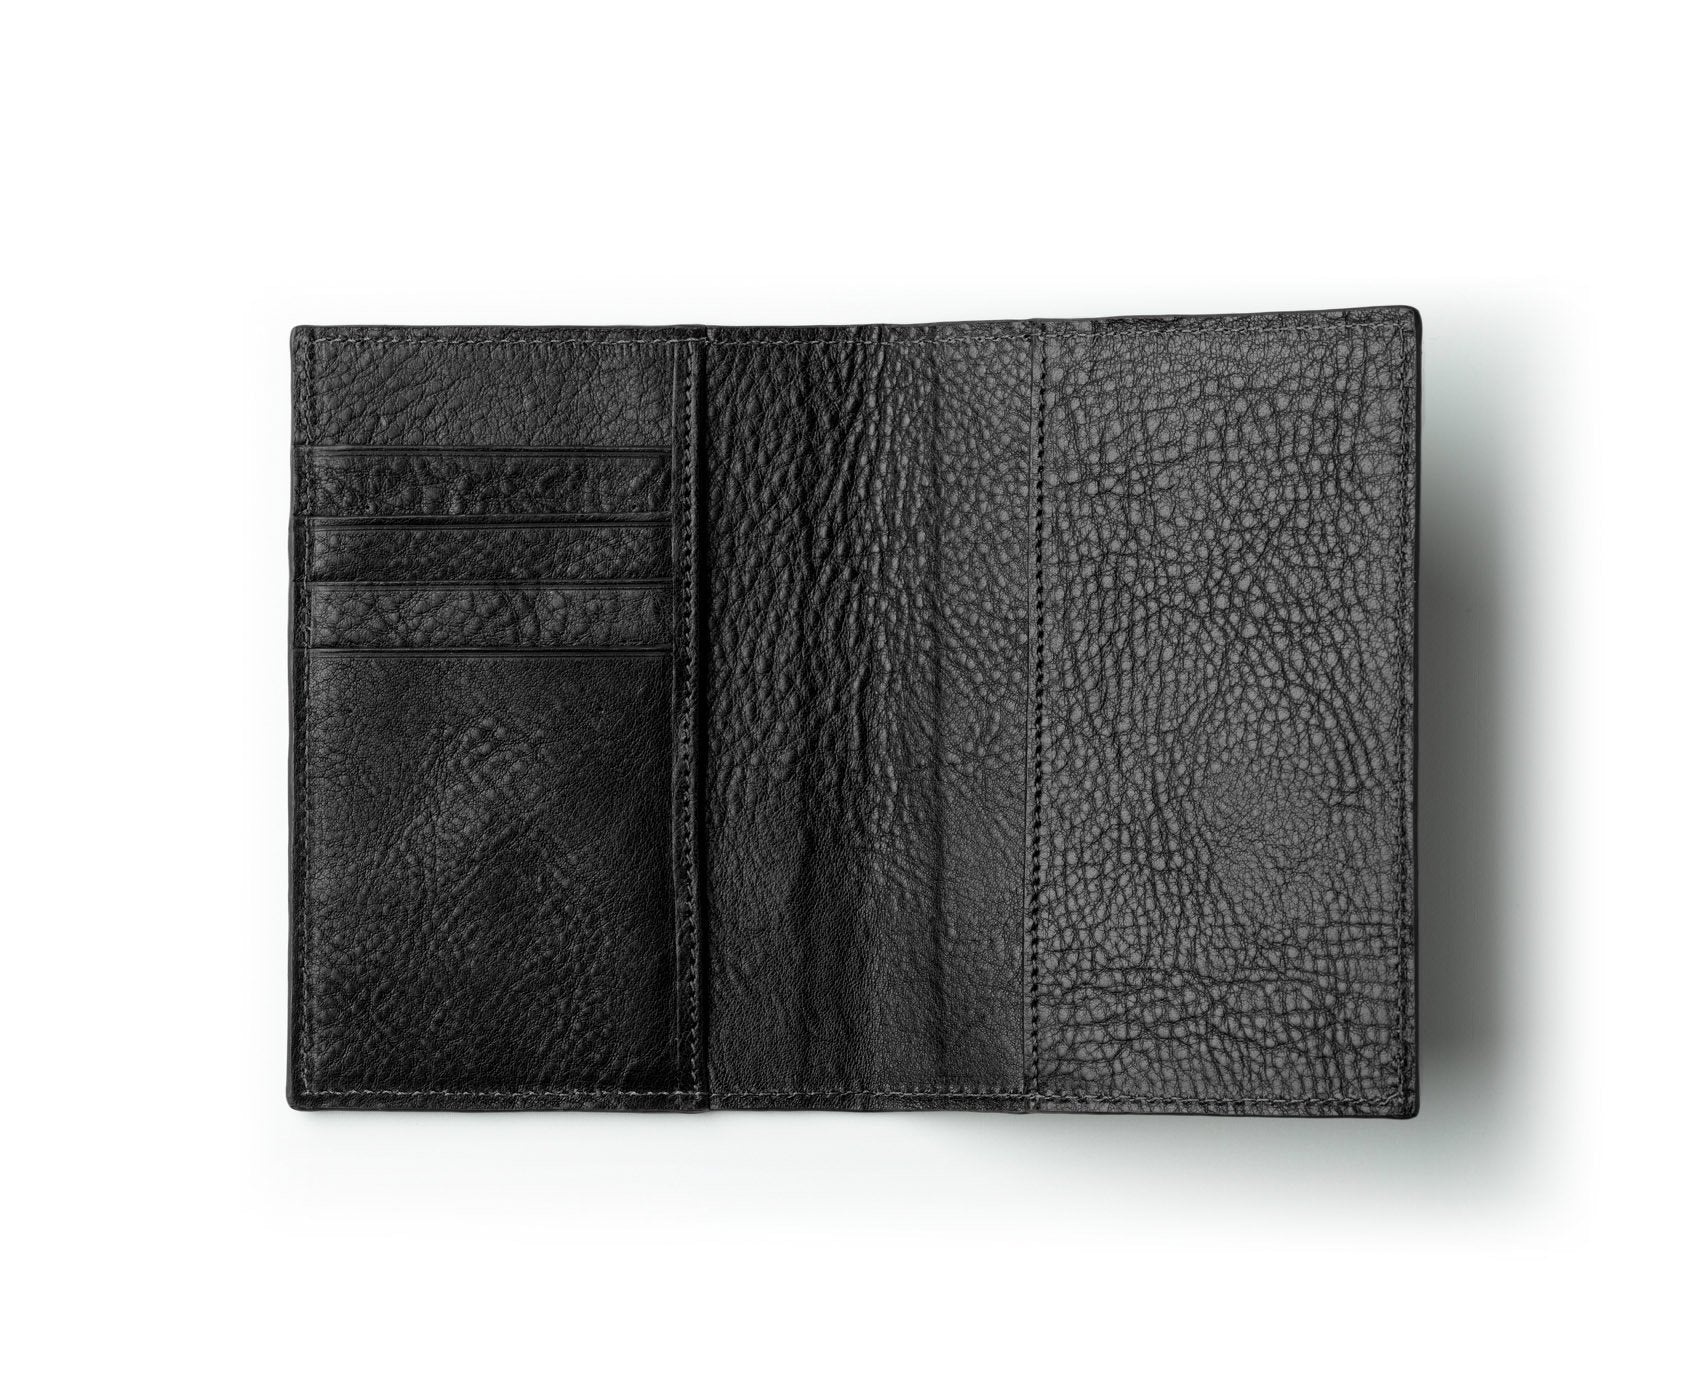 BLACK CROCO Leather Designer Passport Holder, For Office